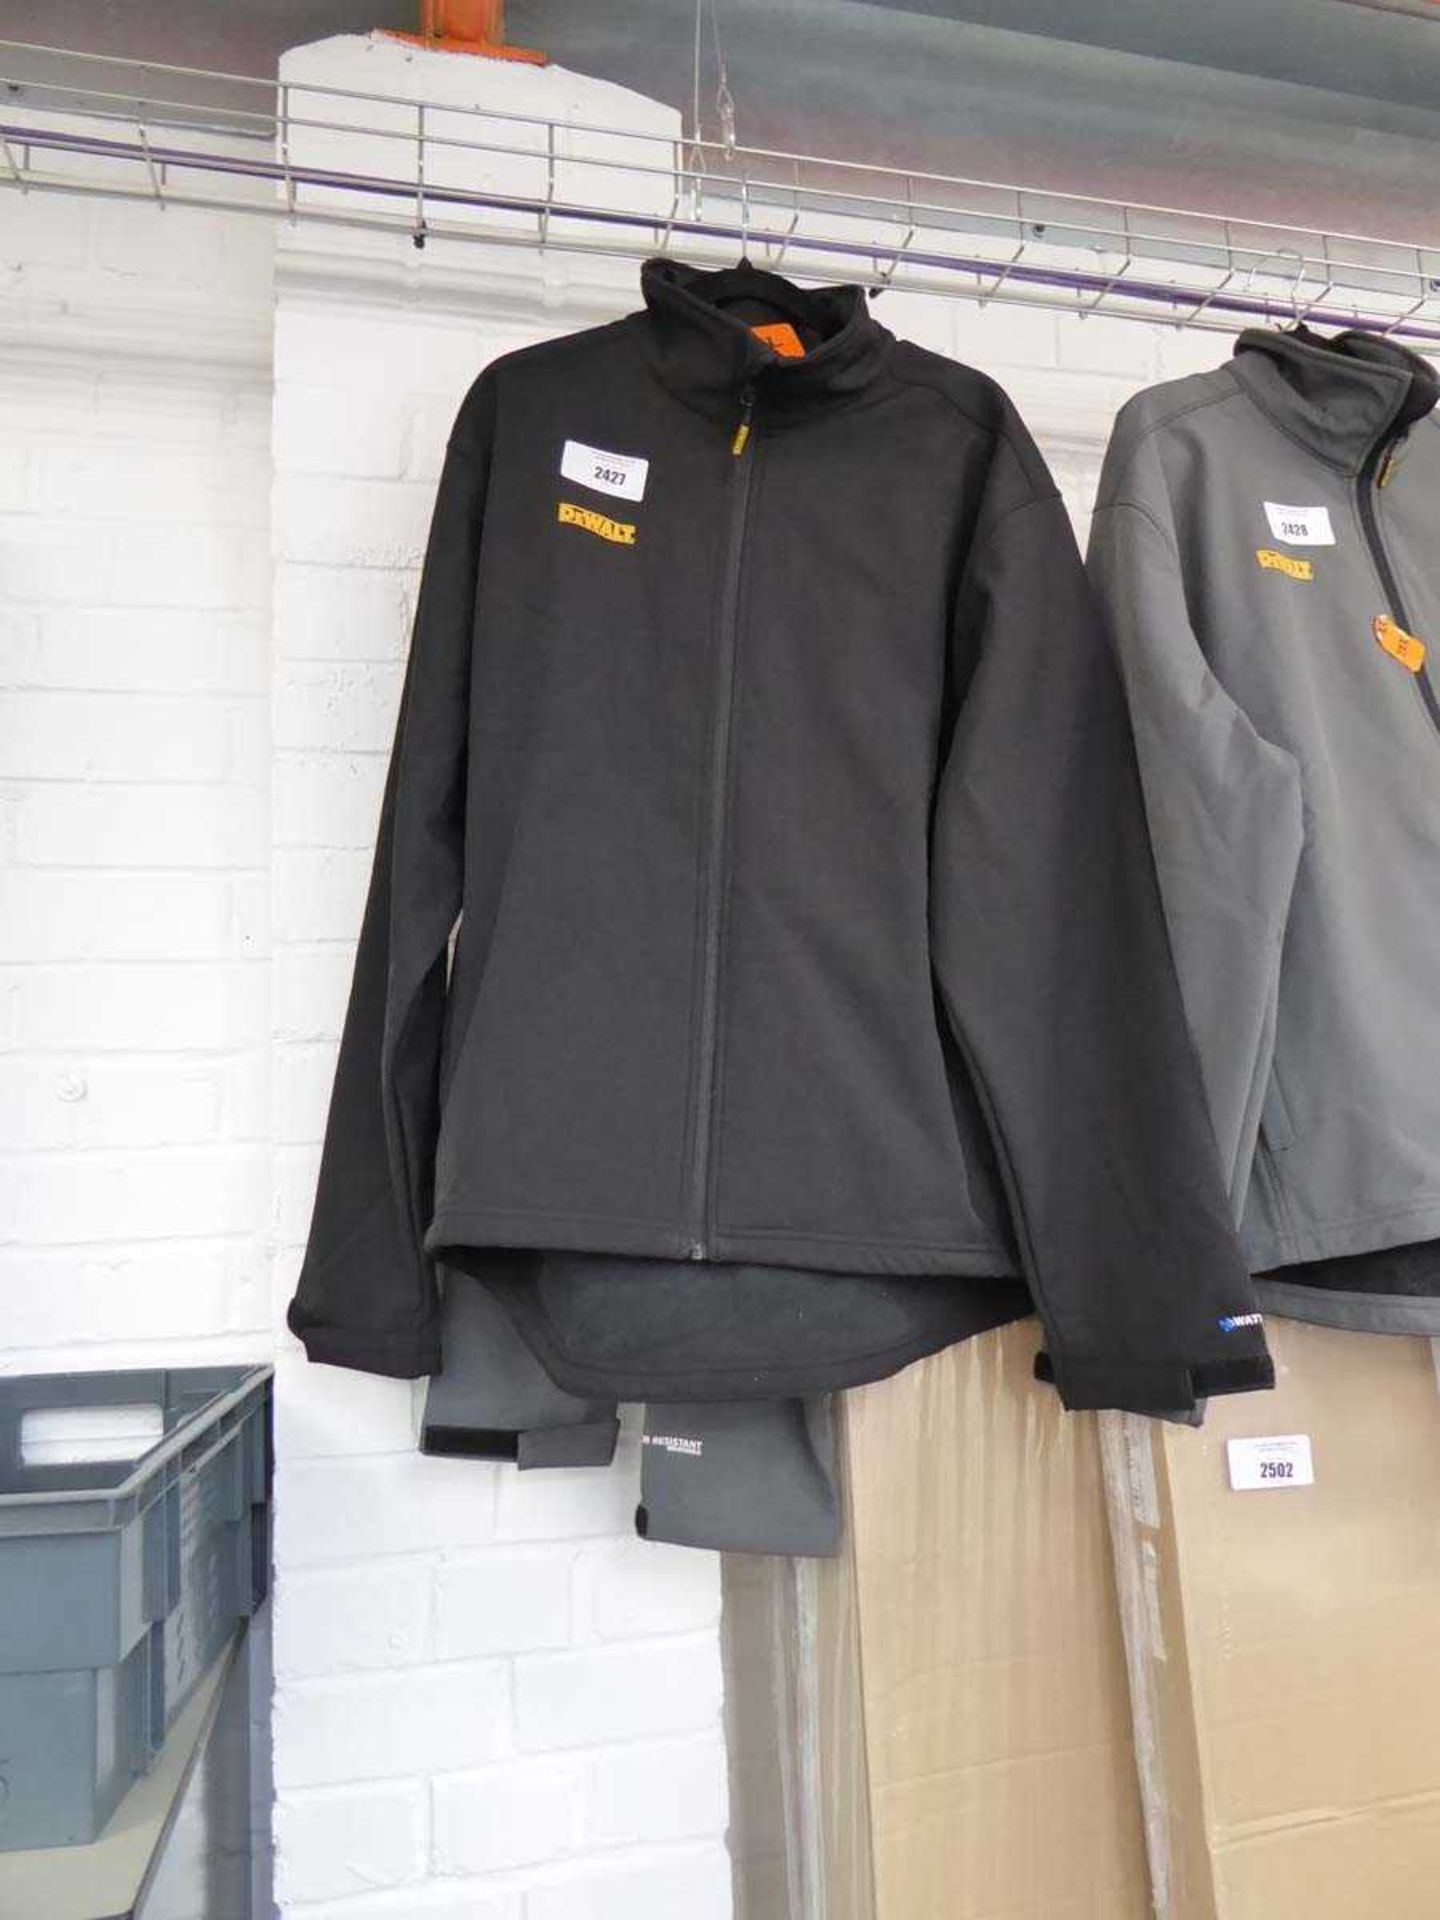 +VAT 2 DeWalt full zip waterproof work jackets in black and grey (size XXL)